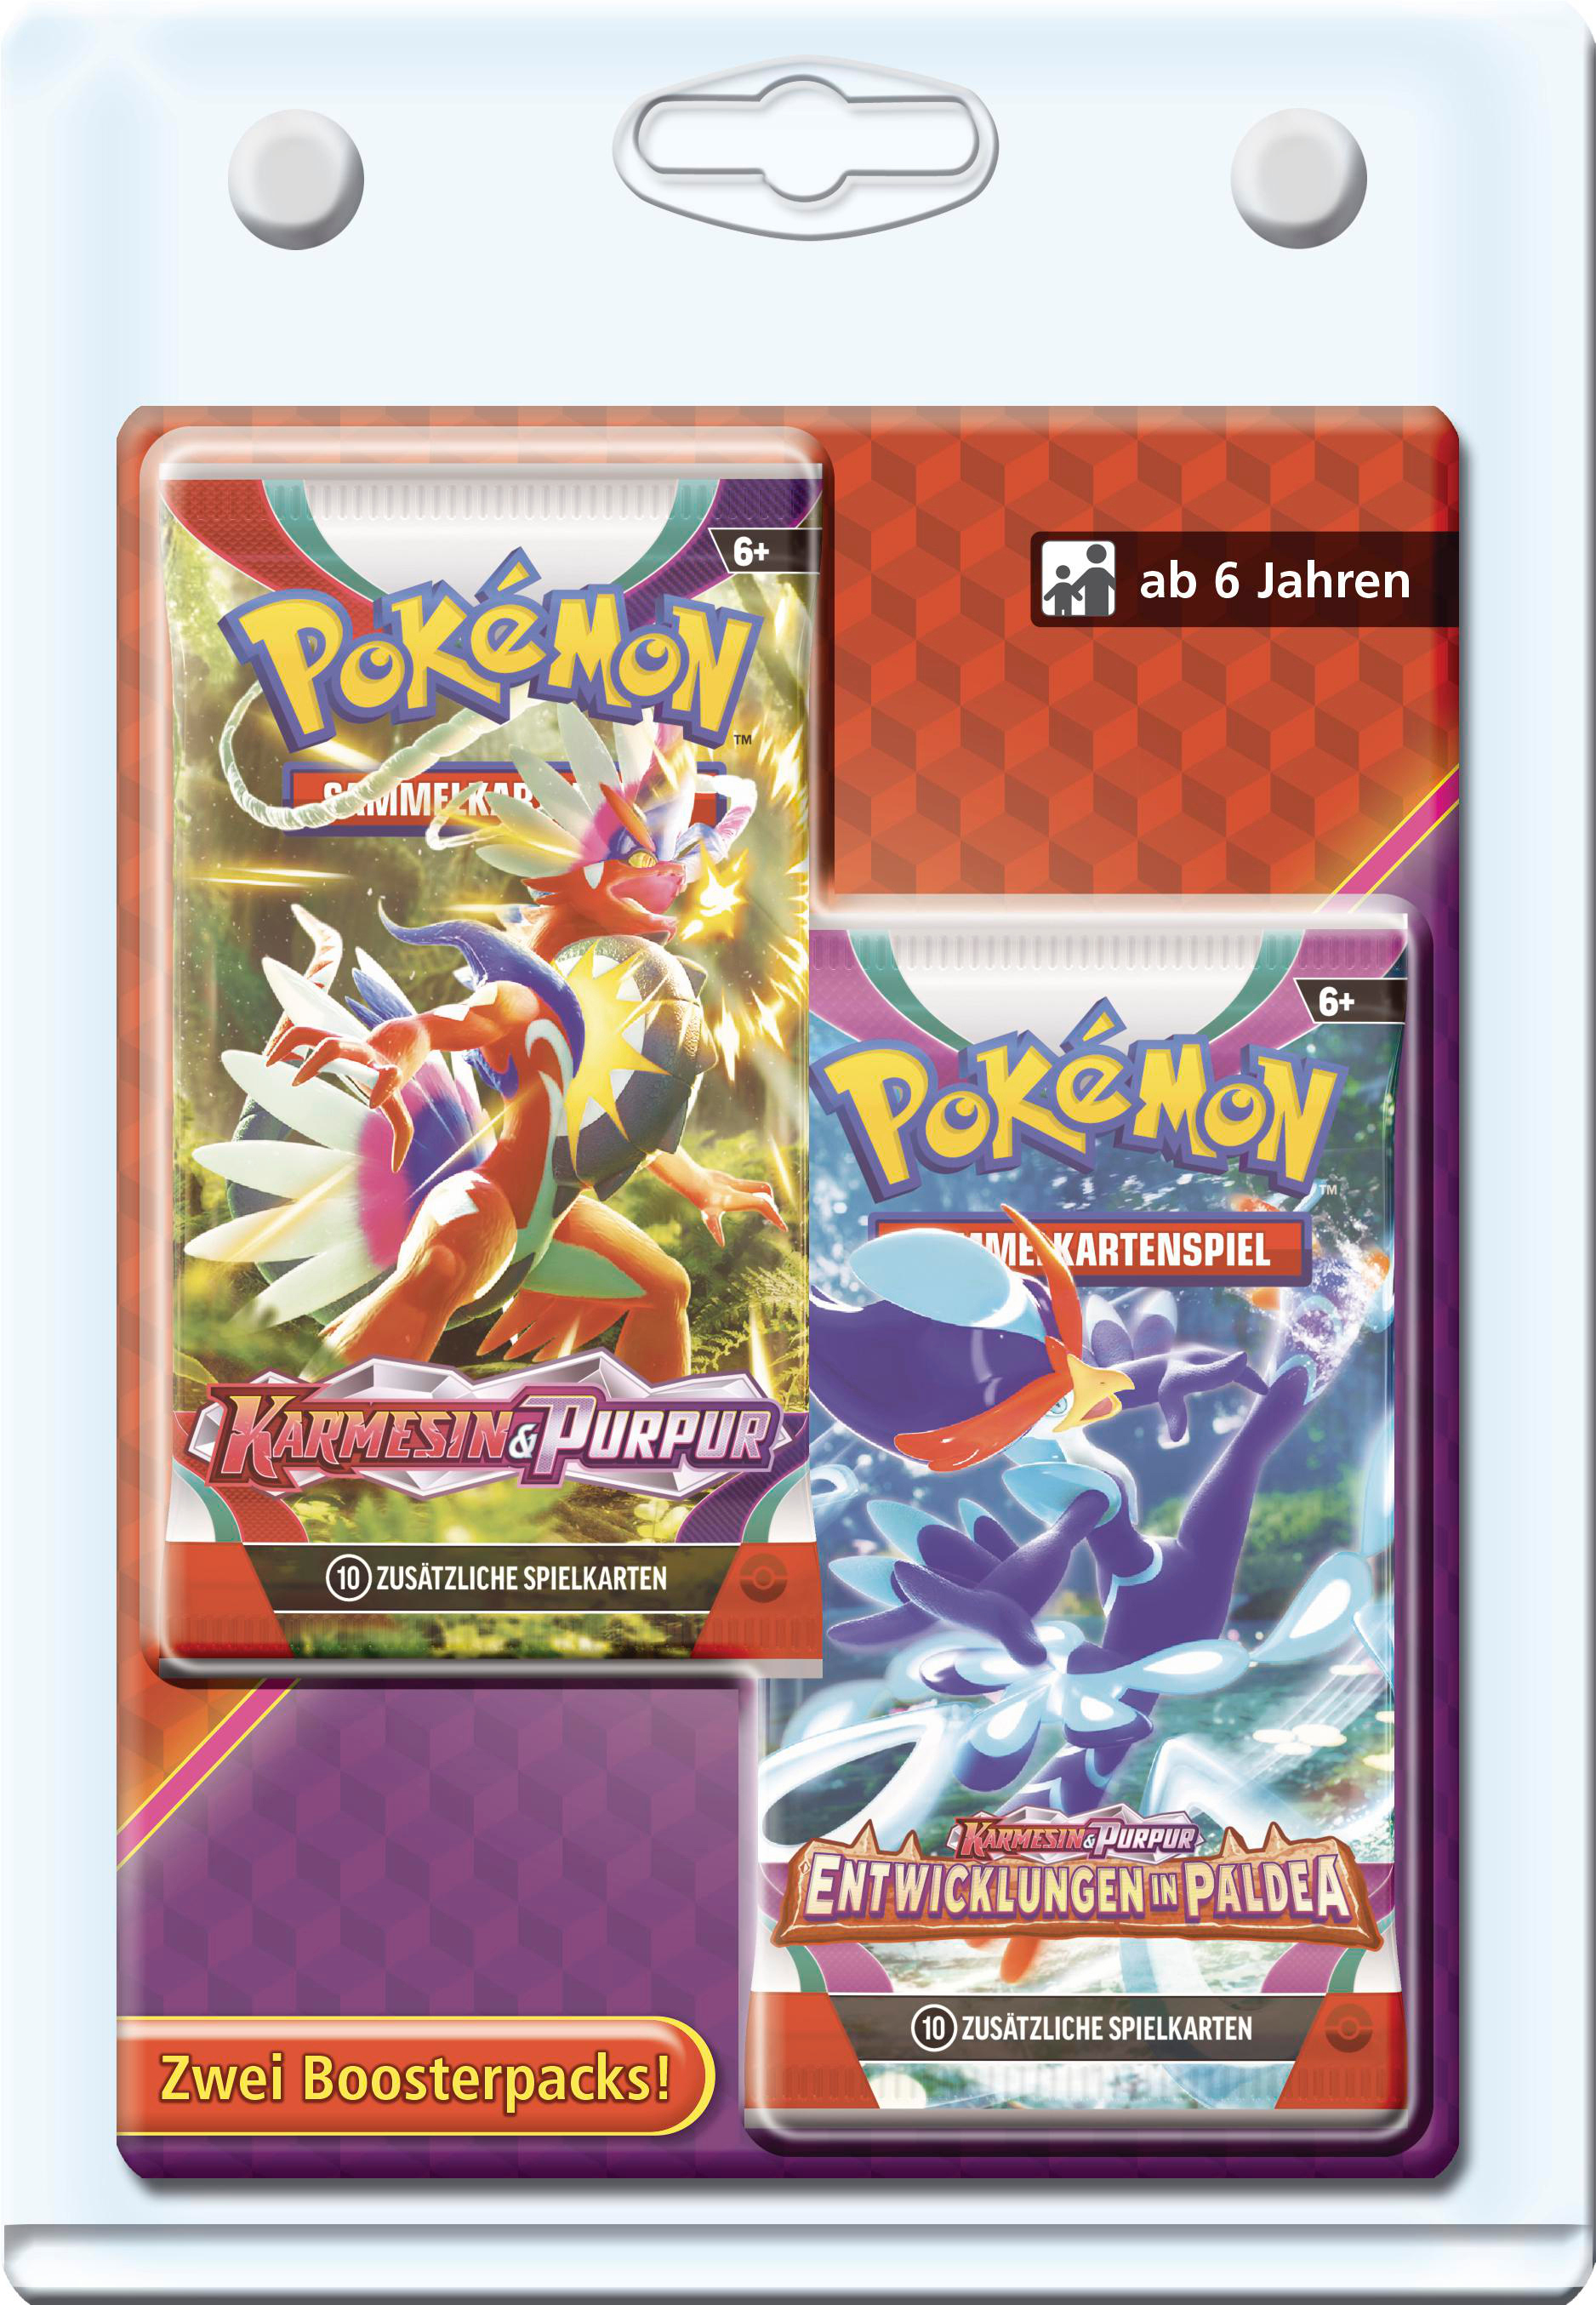 20312 Sammelkarten Pokémon: - POKEMON INT. THE COMPANY Top-Trainer-Box